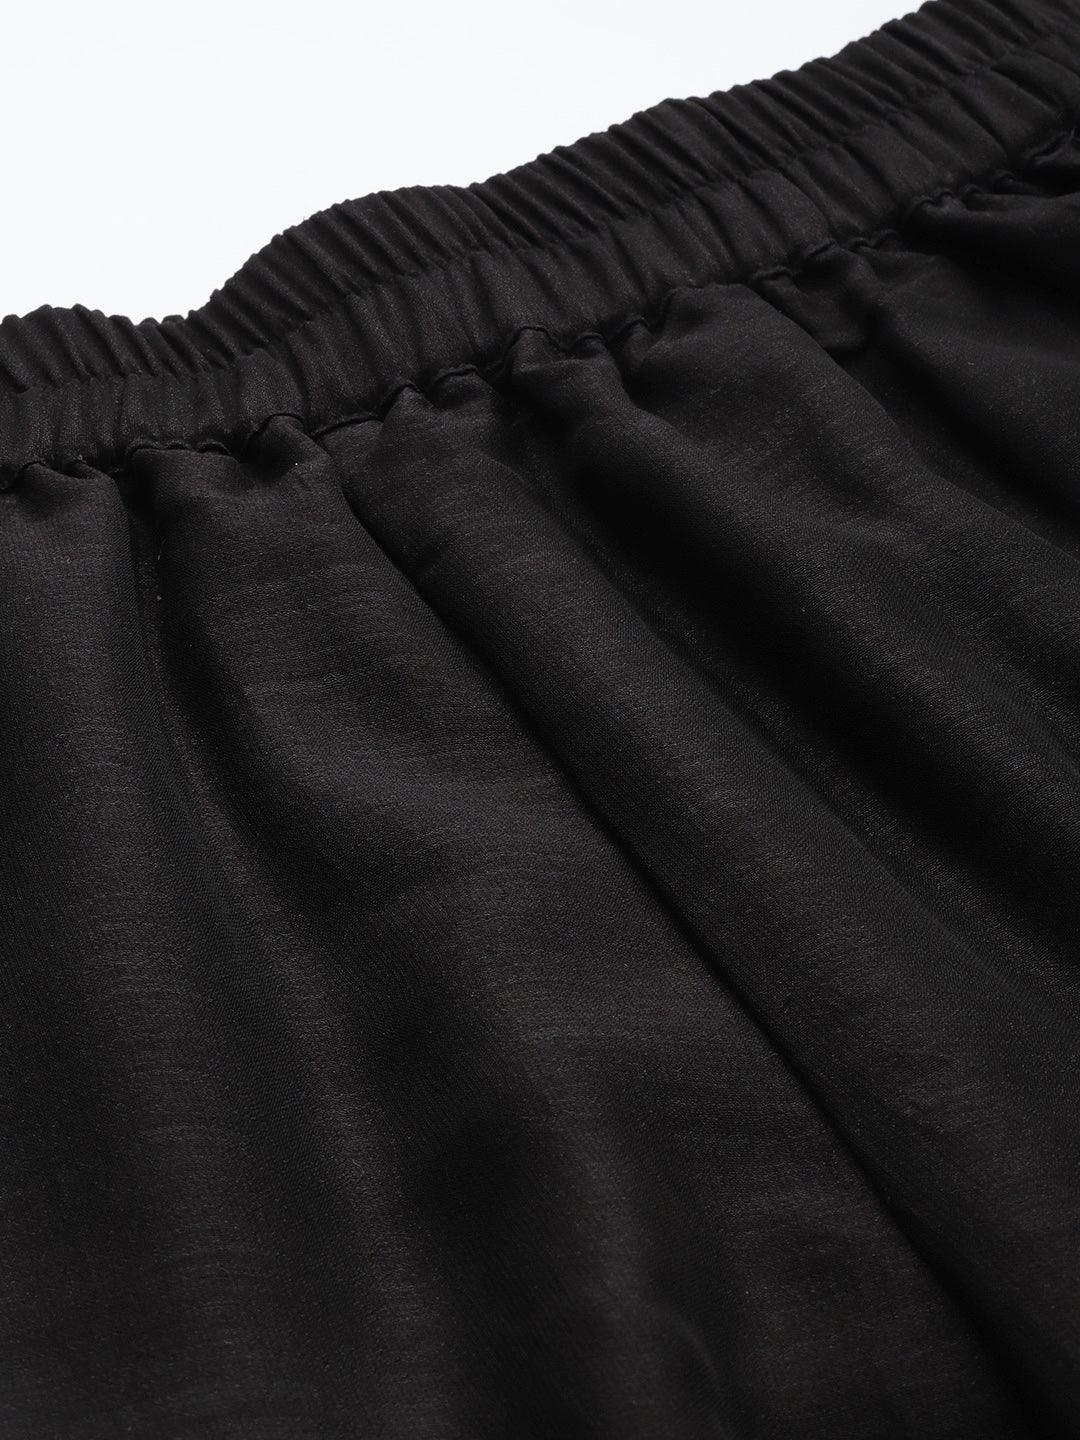 Black Solid Silk Palazzos